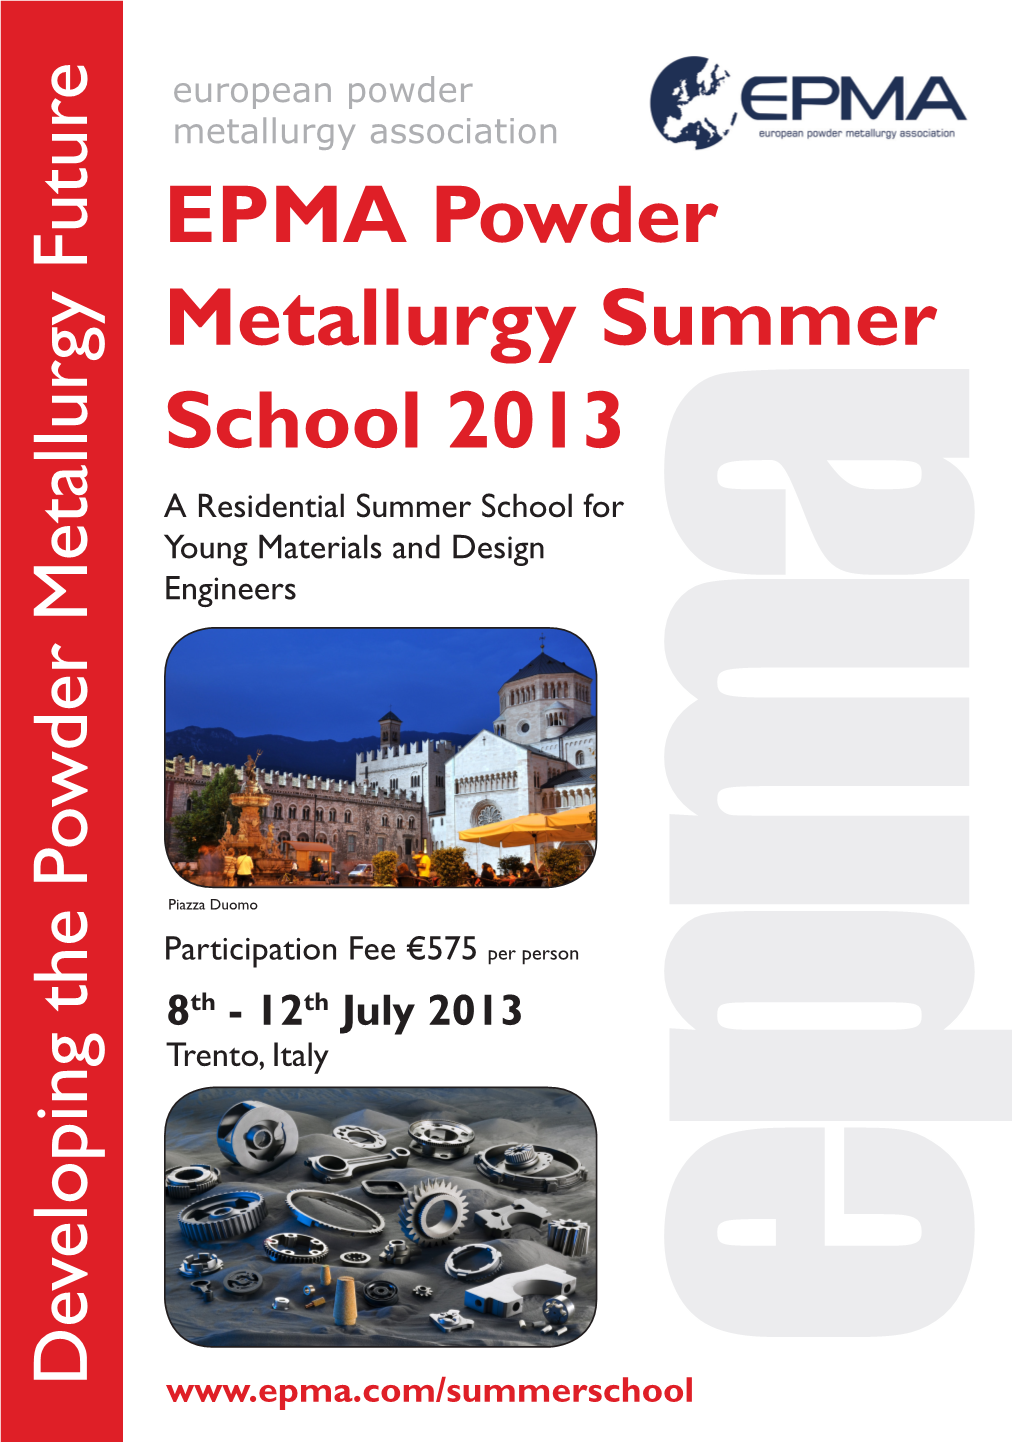 EPMA Powder Metallurgy Summer School 2013